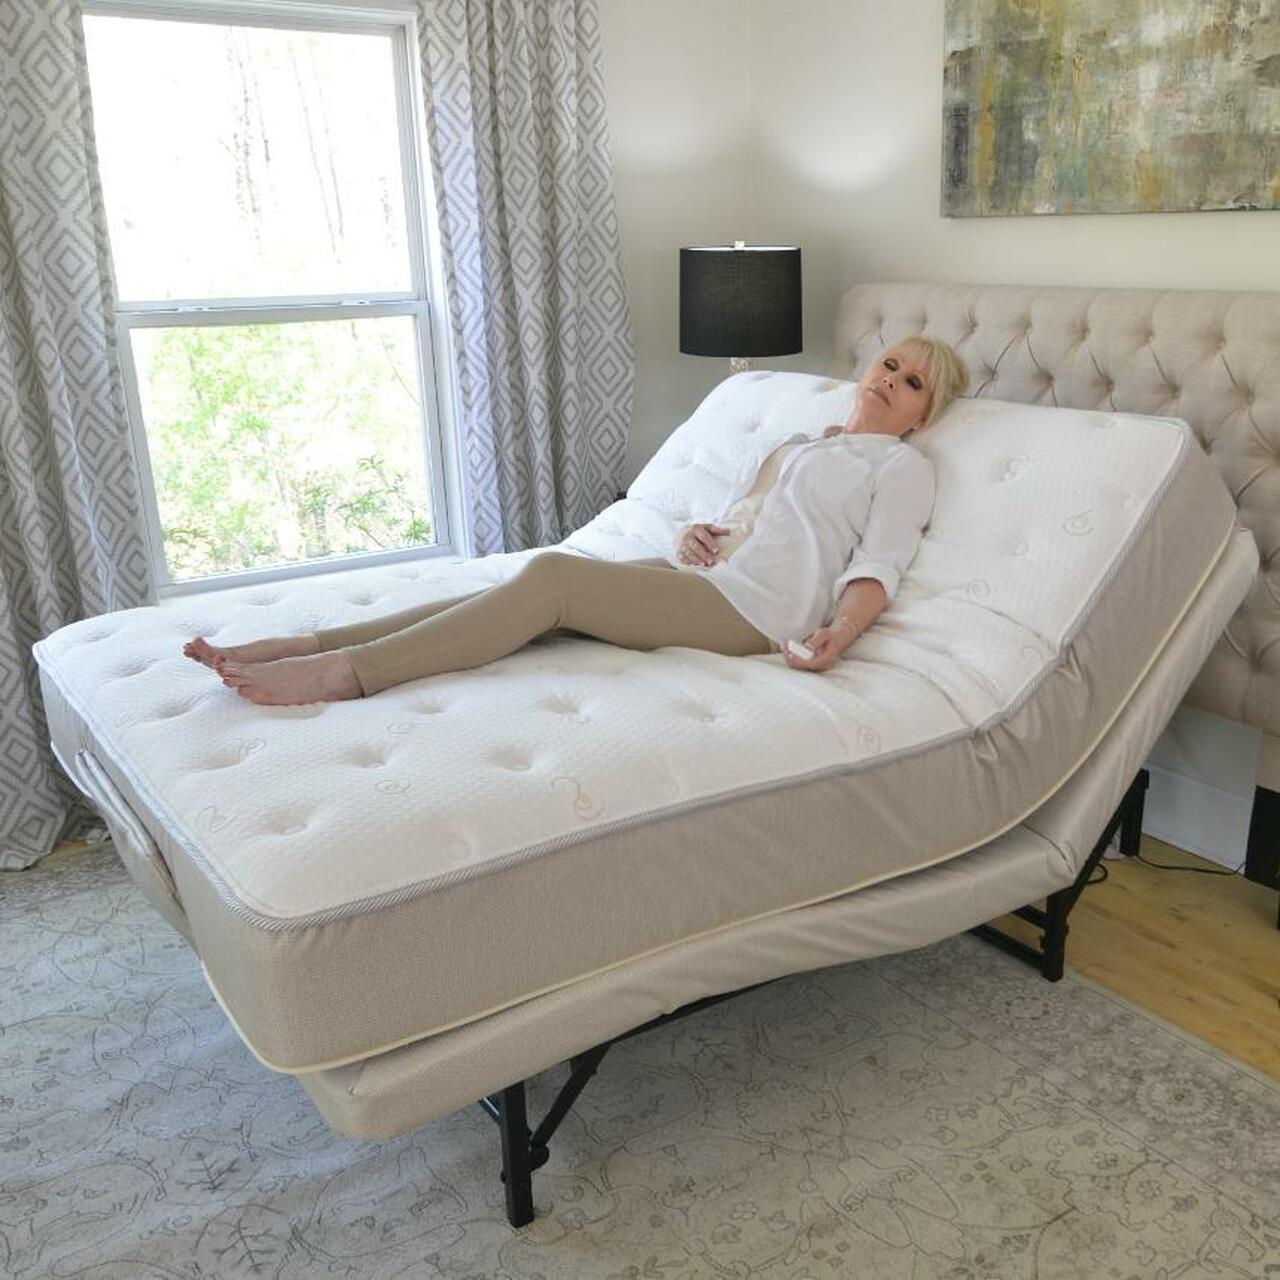 Irvine Adjustable Beds